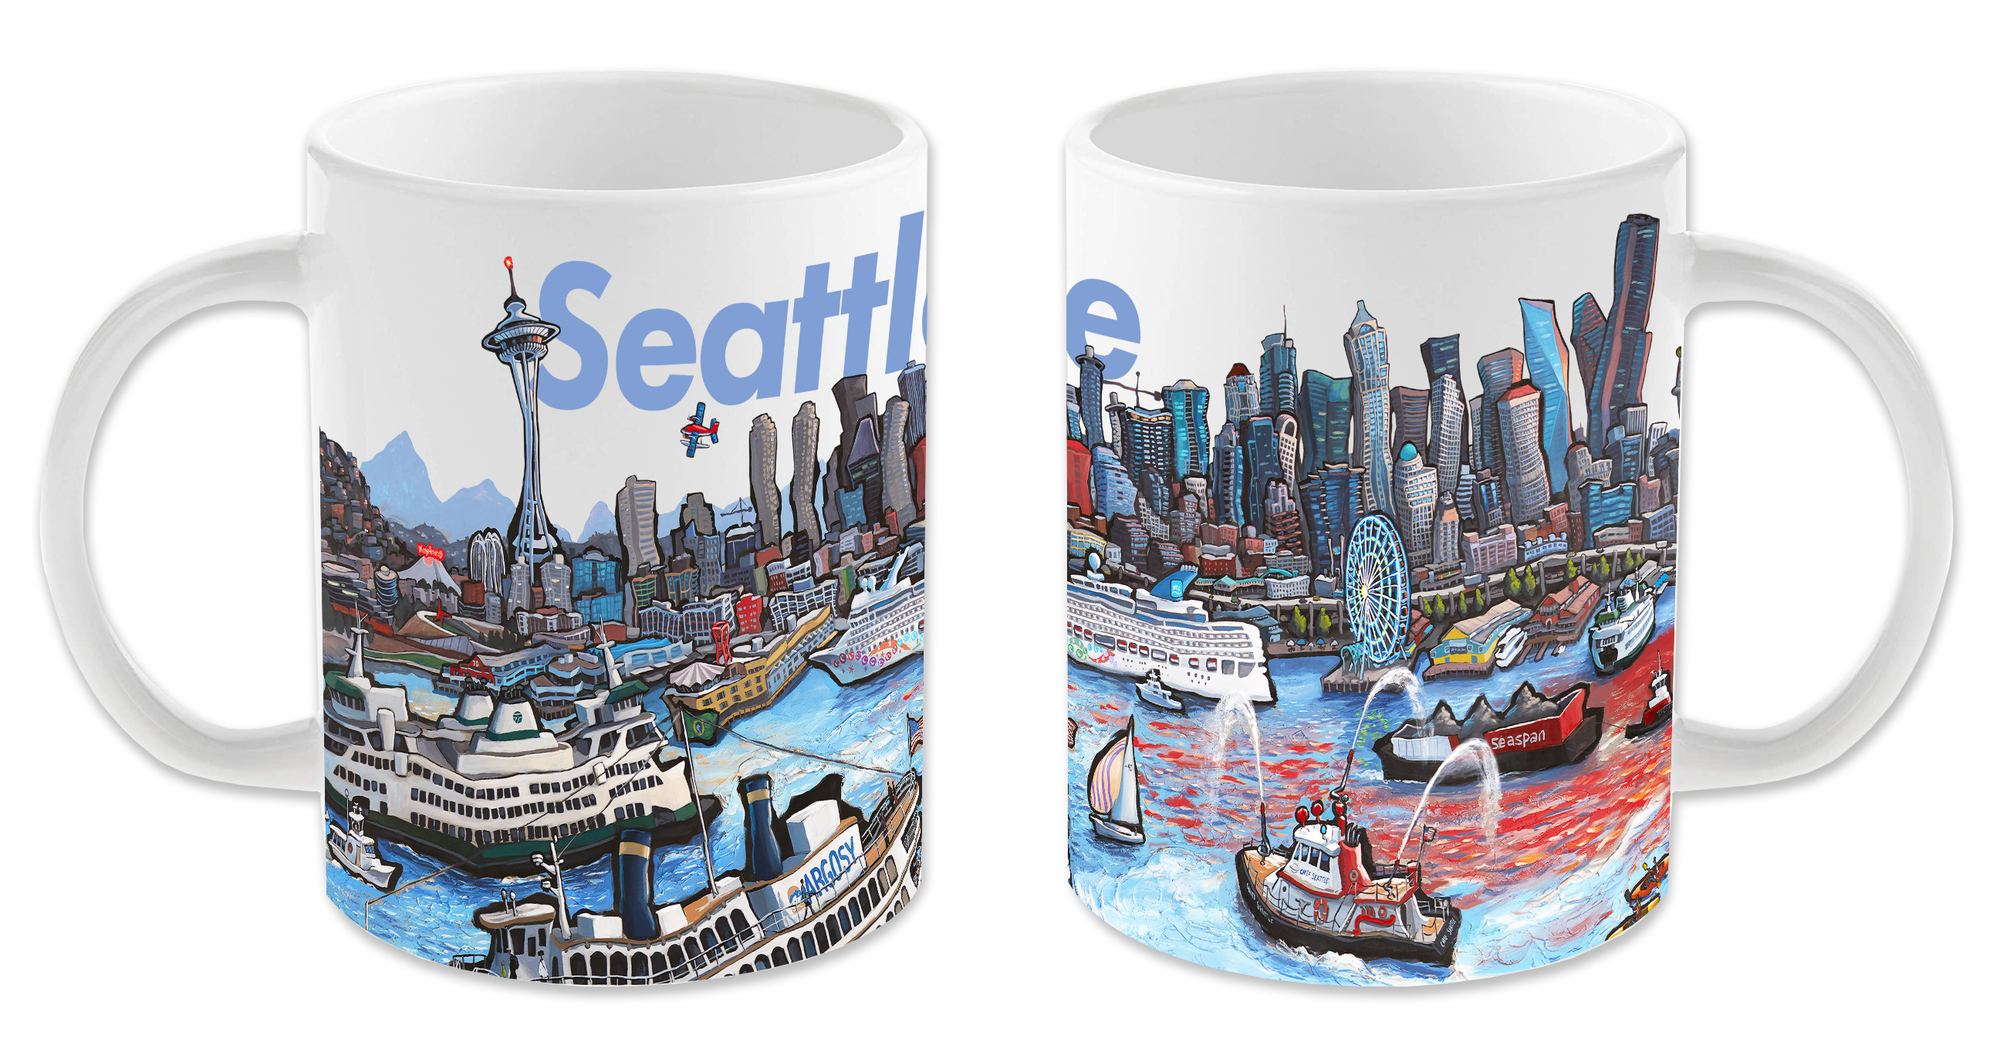 "Downtown Seattle" Mug